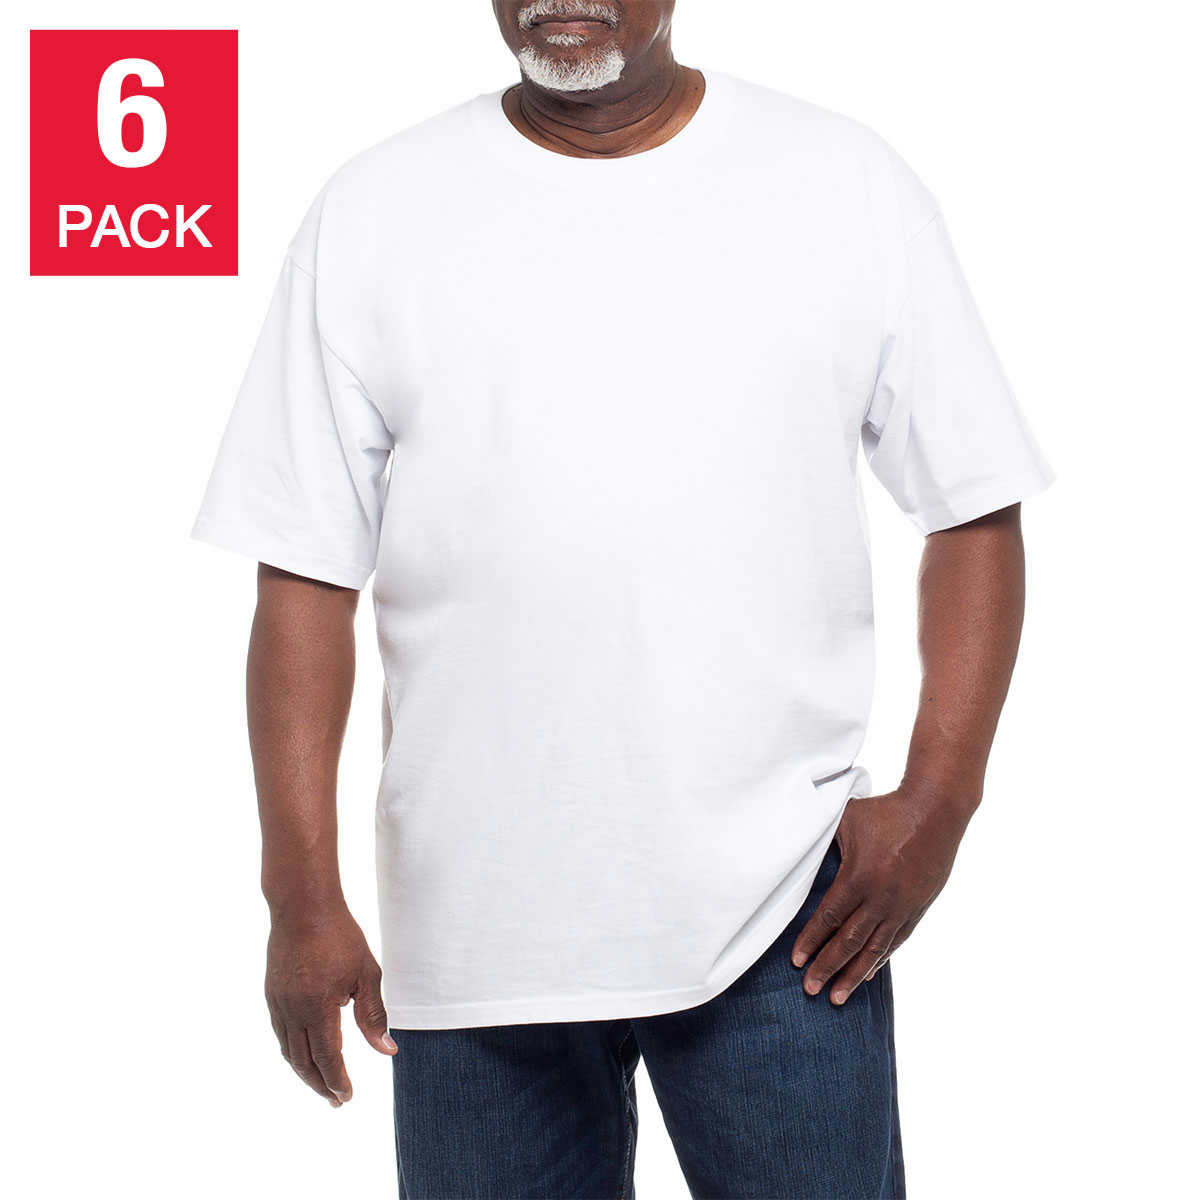 Men's Big Size Crewneck Tagless Undershirt (5 Pack) 